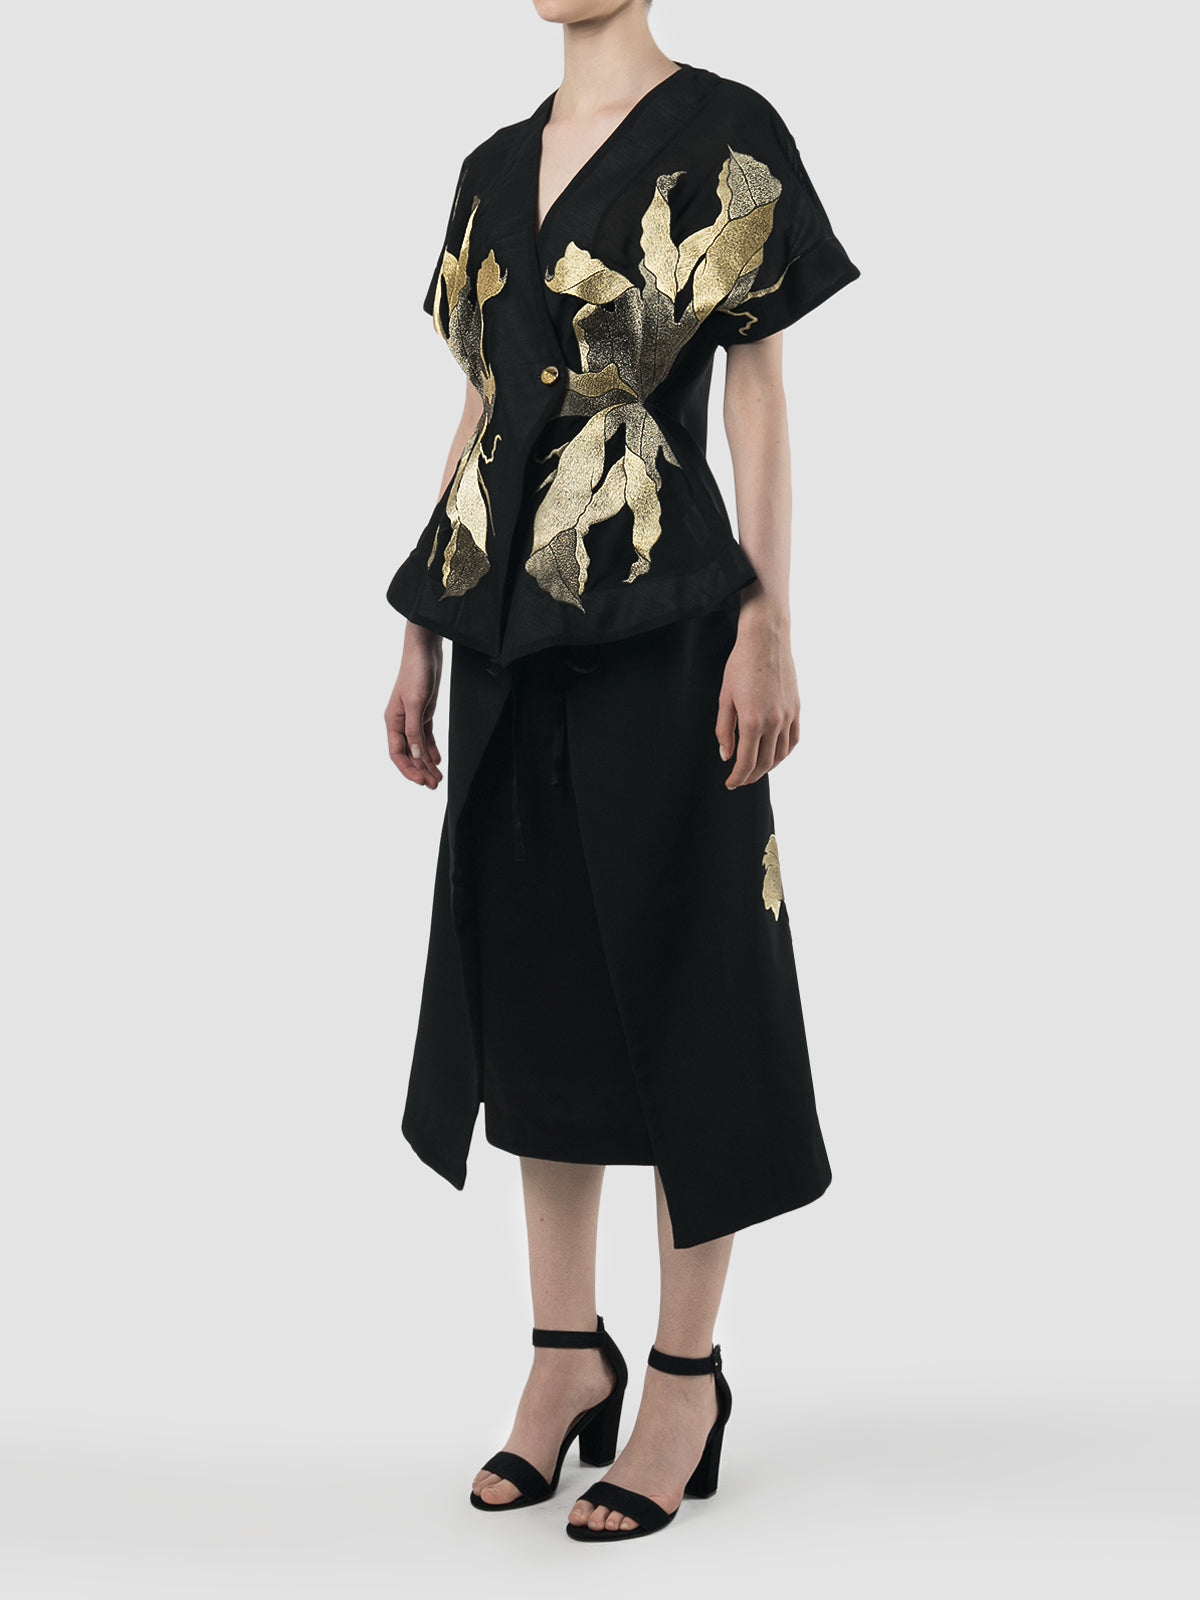 Black transparent signature kimono with gold embroidery